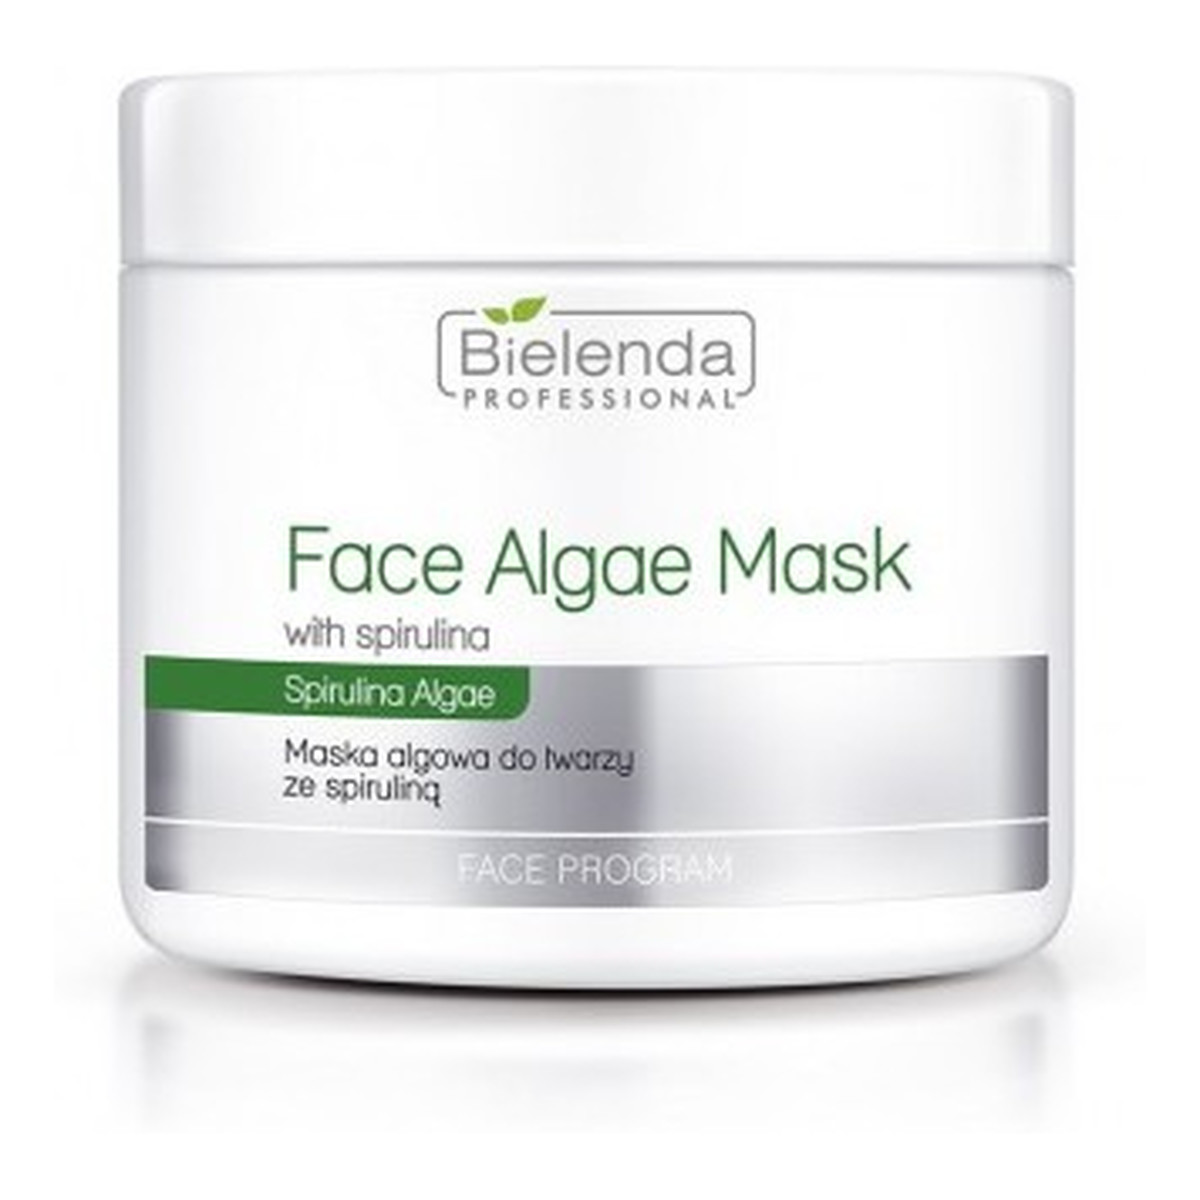 Bielenda Professional Face Algae Mask Maska Algowa Ze Spiruliną Cera Niedotleniona Szara Cera palacza 190g